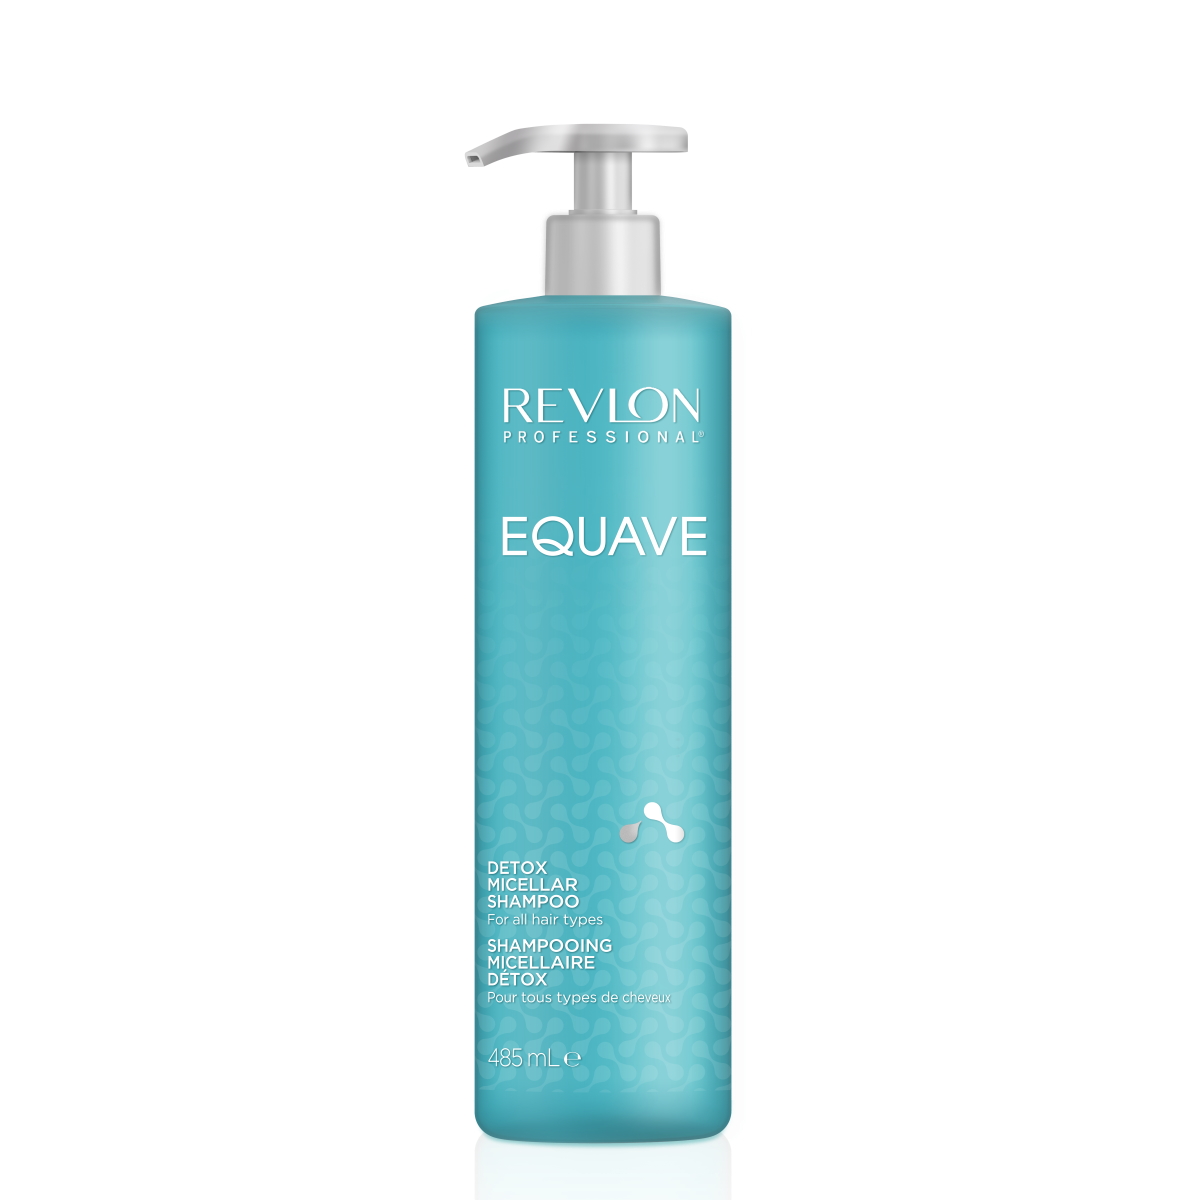 Revlon Detox Micellar Shampoo 485ml